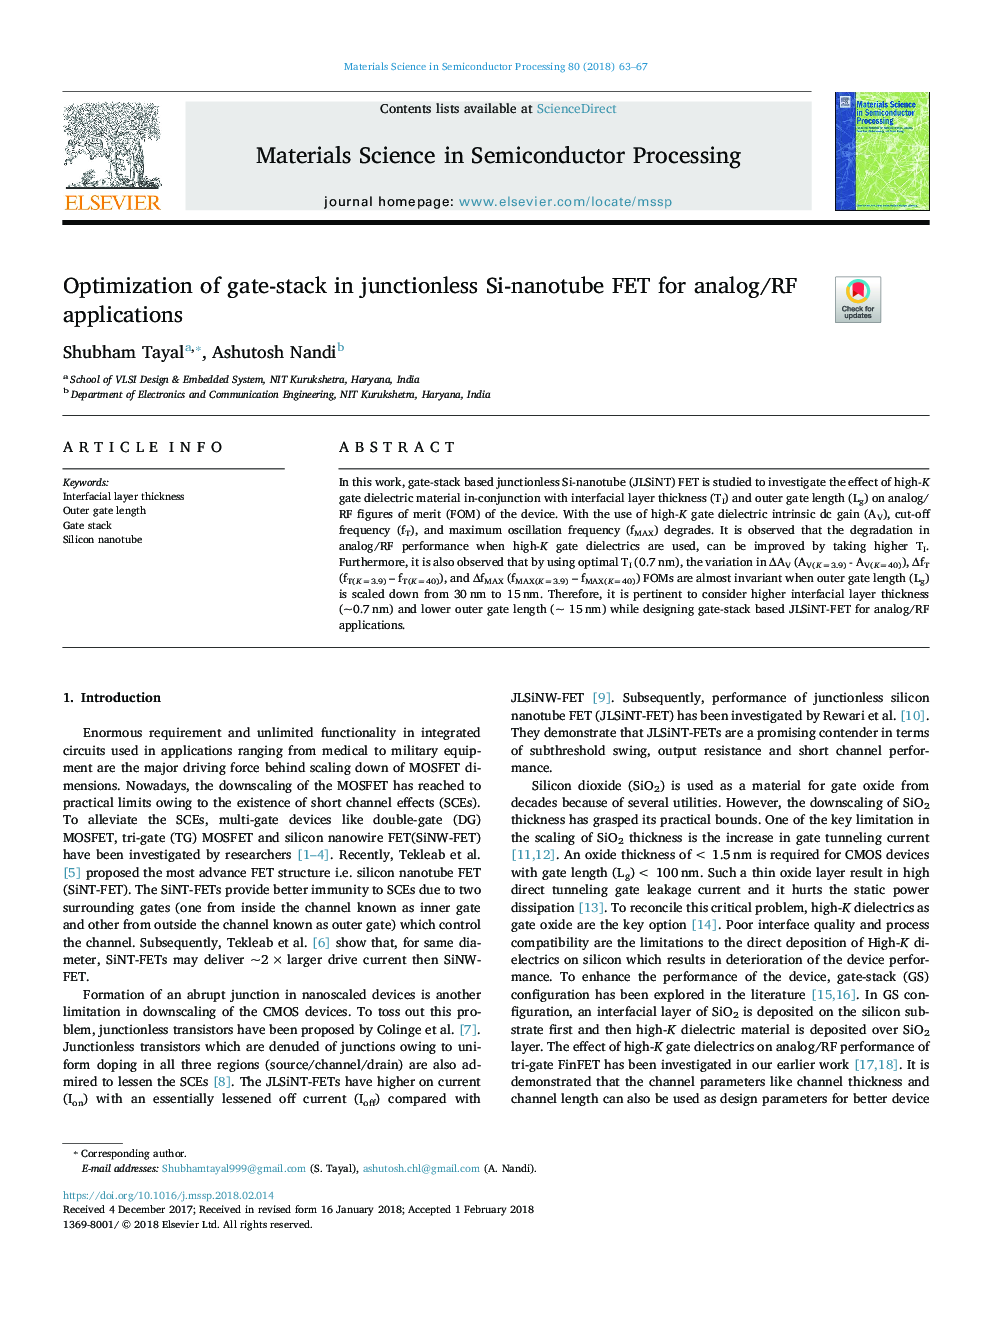 Optimization of gate-stack in junctionless Si-nanotube FET for analog/RF applications